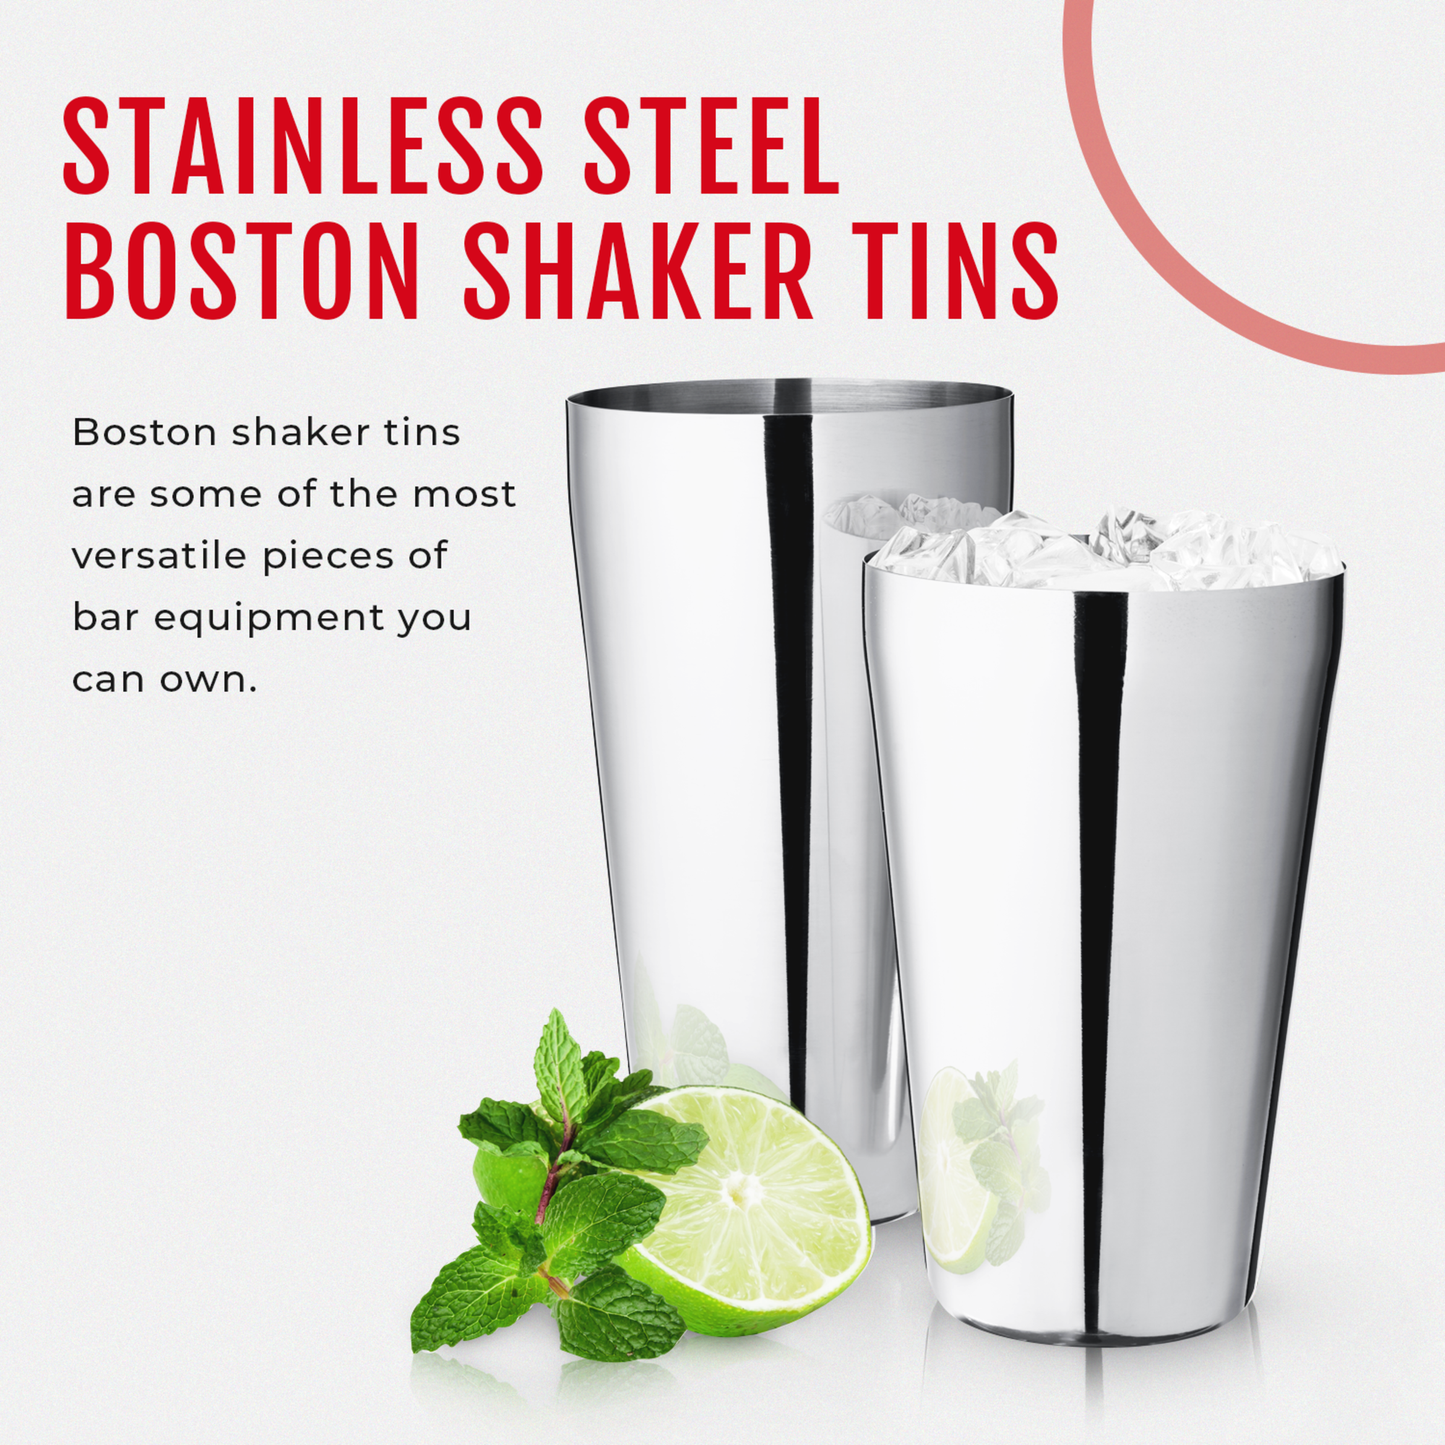 Stainless Steel Boston Shaker Tins